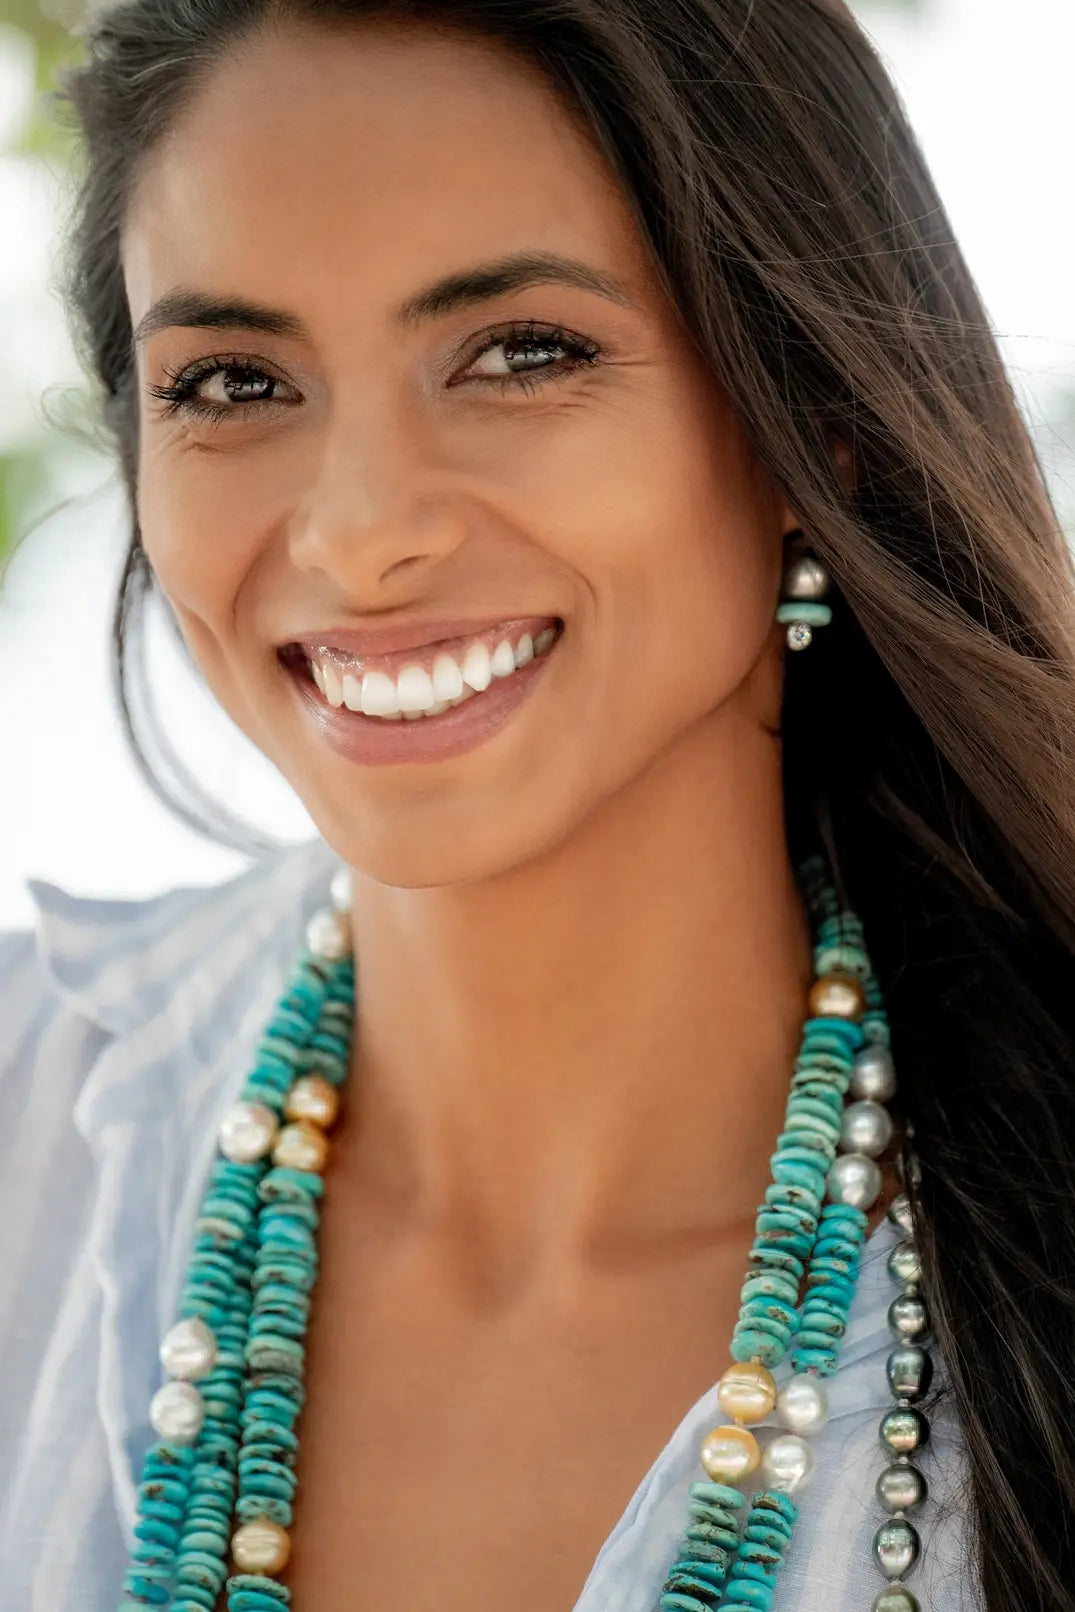 Tahitian Pearls & Turquoise Earrings